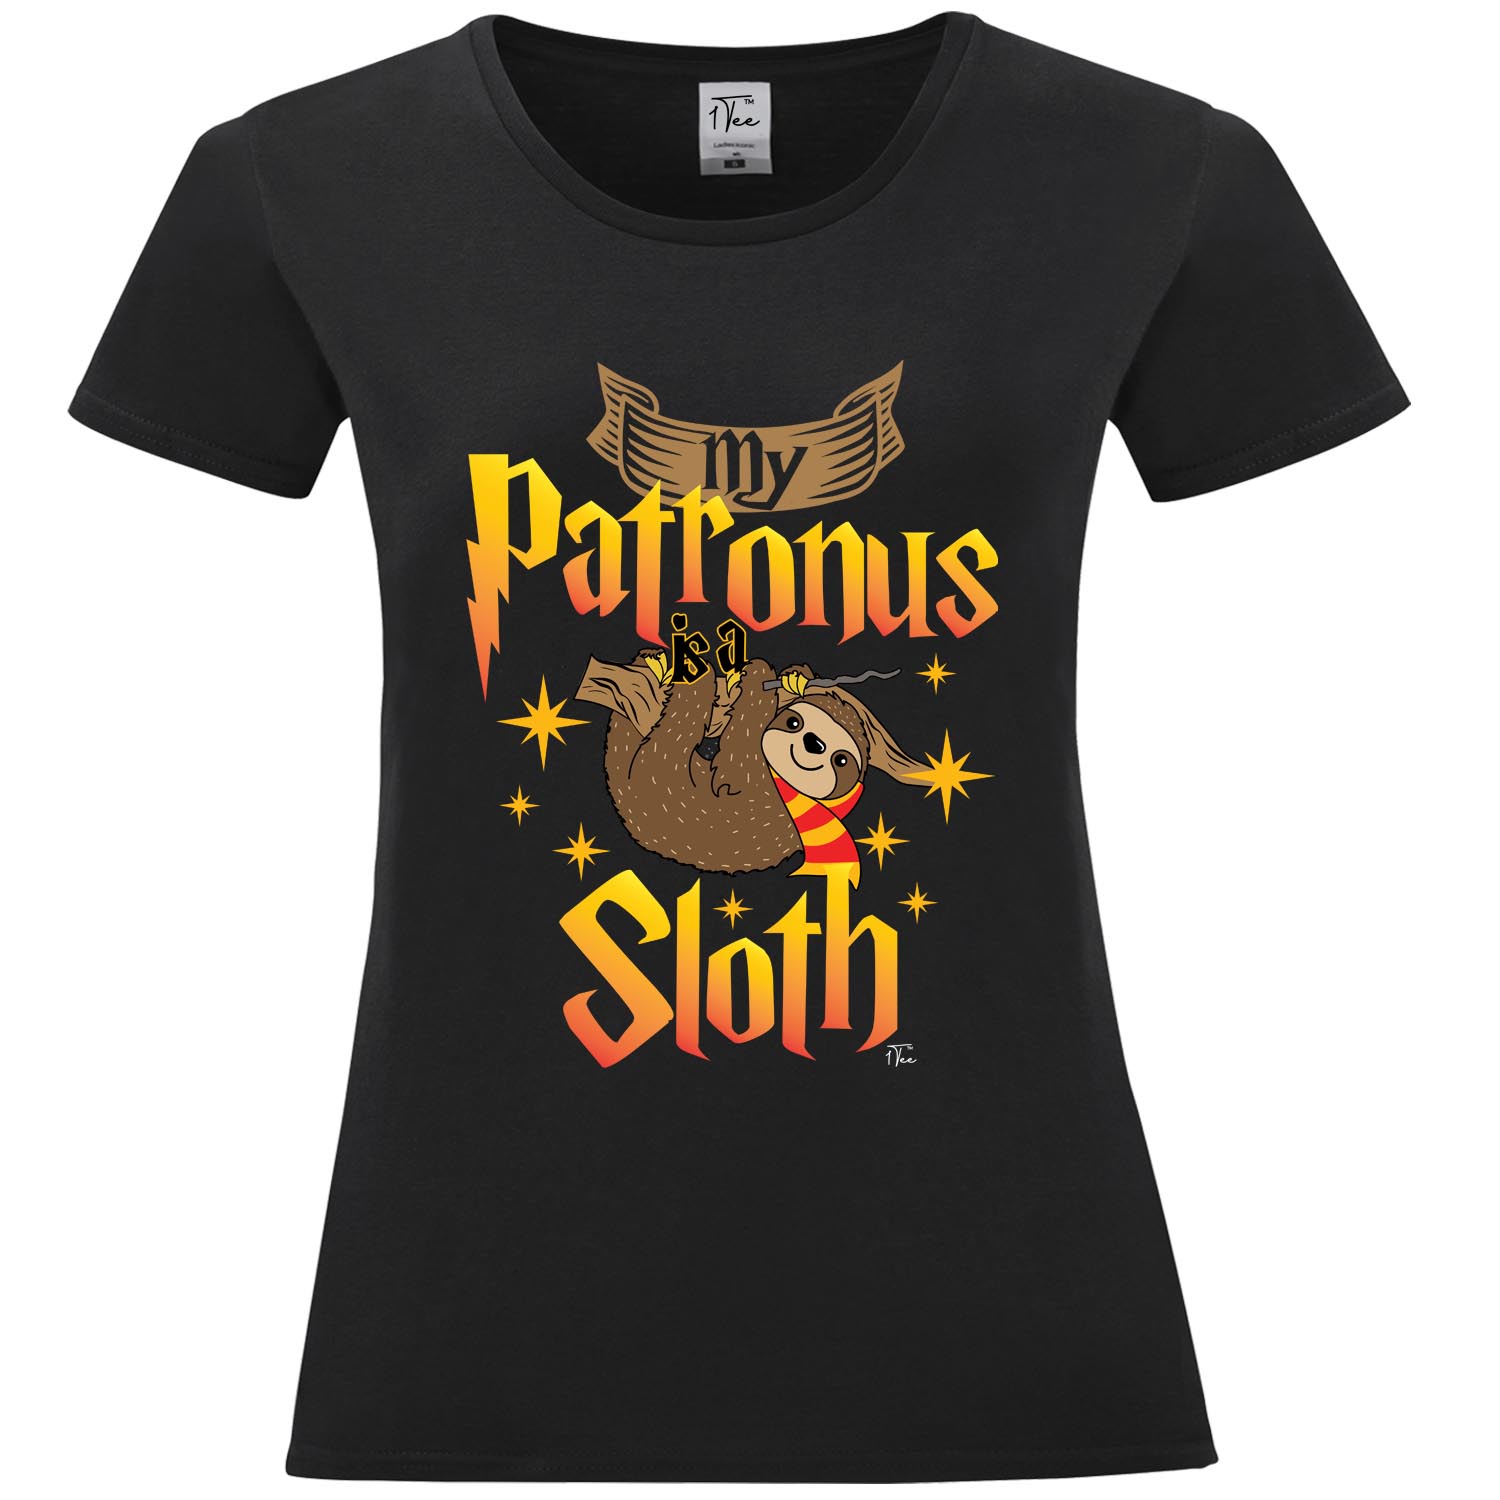 Aiw Wfdnn My Patronus is A Sloth T-Shirts Short-Sleeve Womens